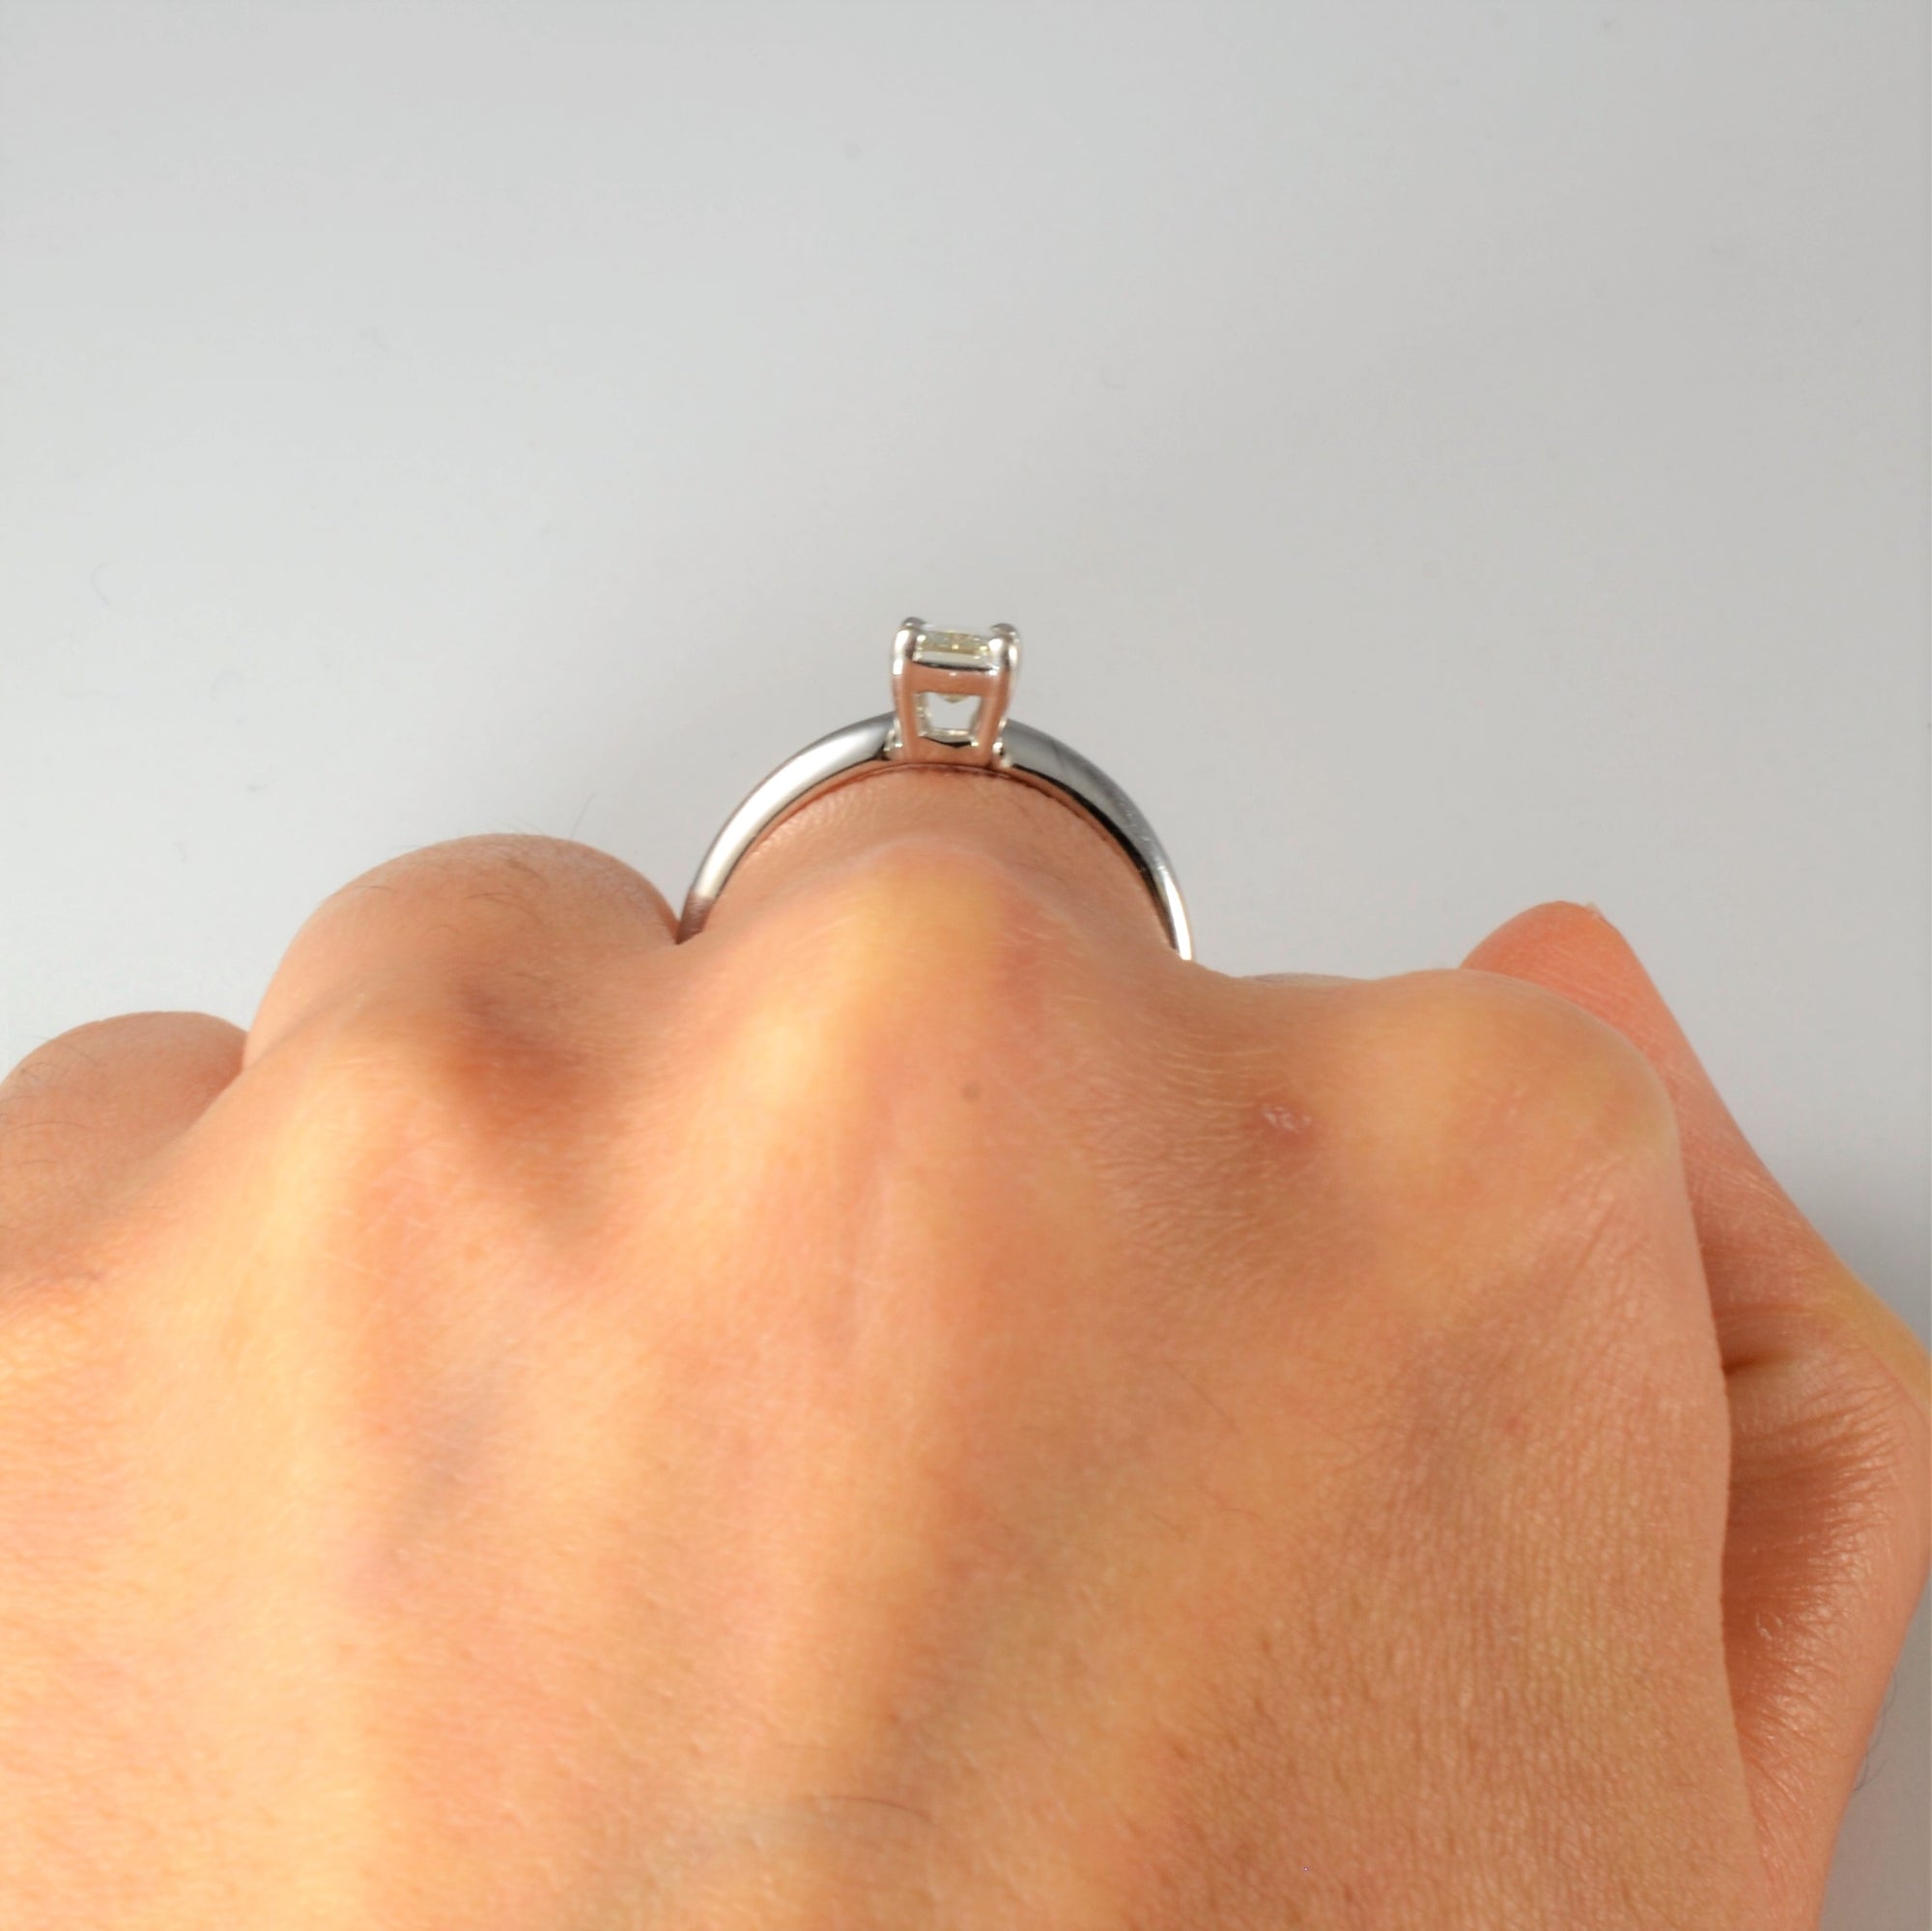 Solitaire Emerald Cut Diamond Engagement Ring | 0.80ct | SZ 7.75 |